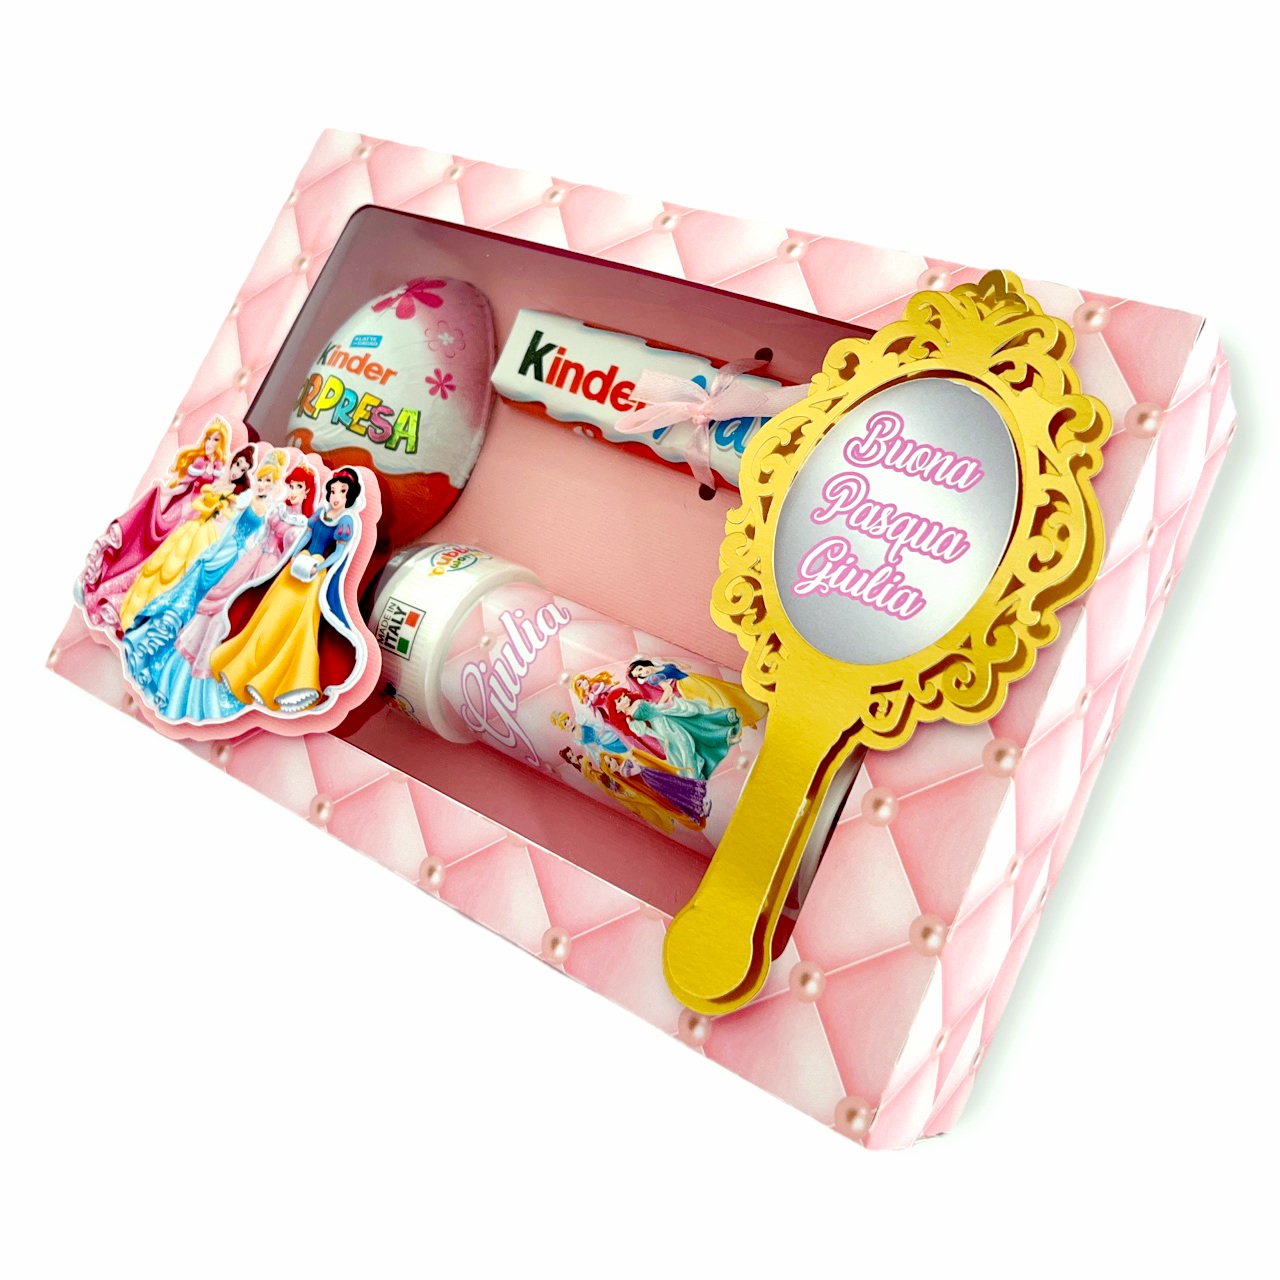 Principesse Disney Gift Box » Torte di Caramelle di Laura